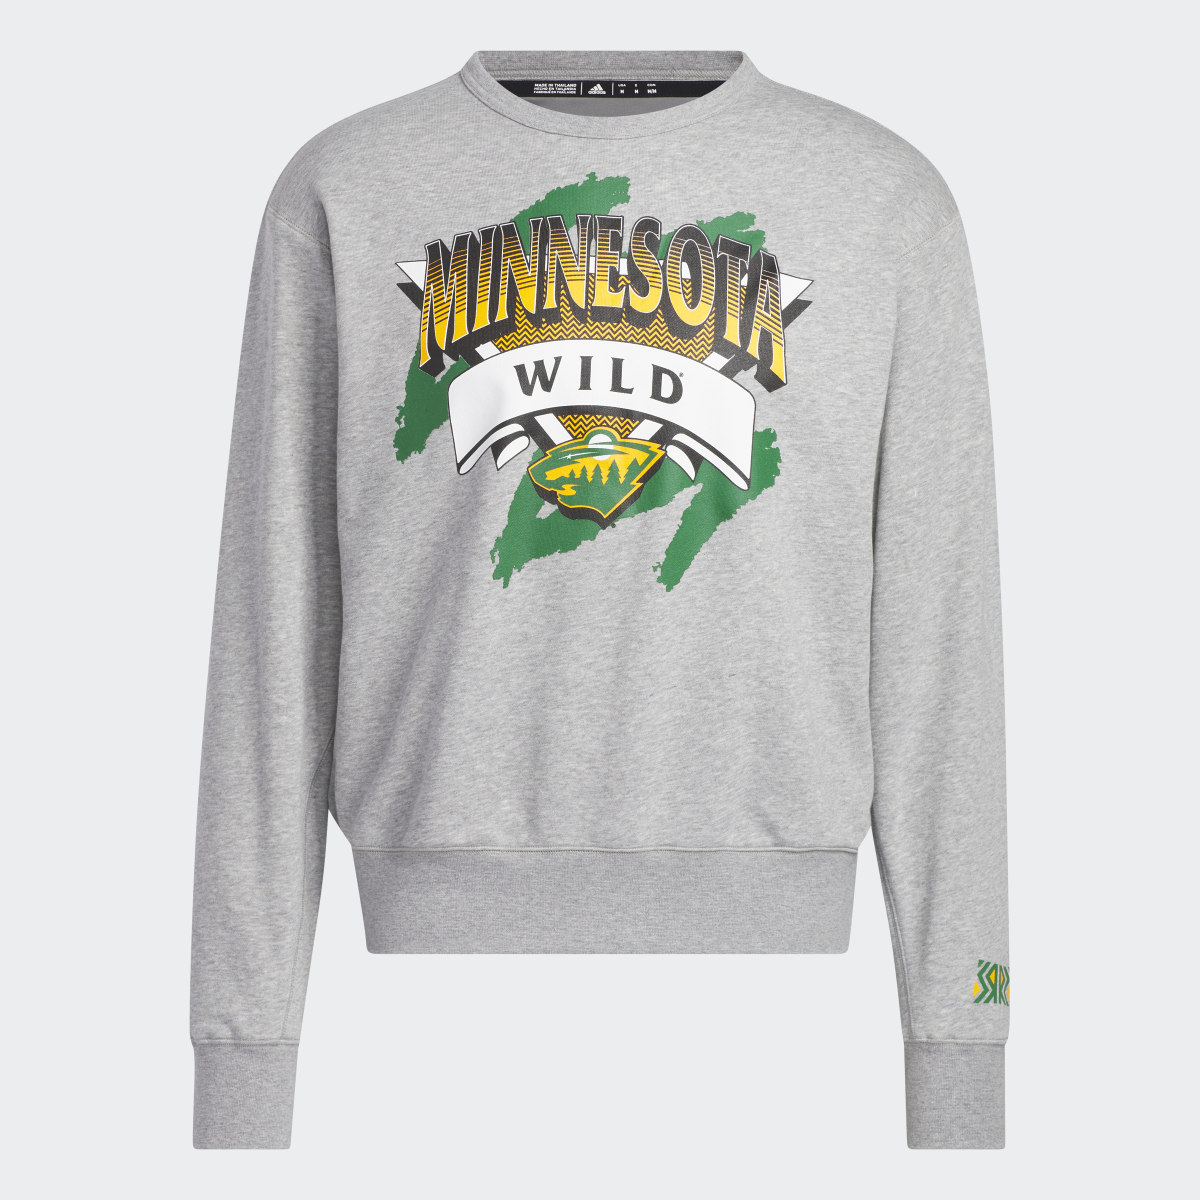 Adidas Wild Vintage Crew Sweatshirt. 5